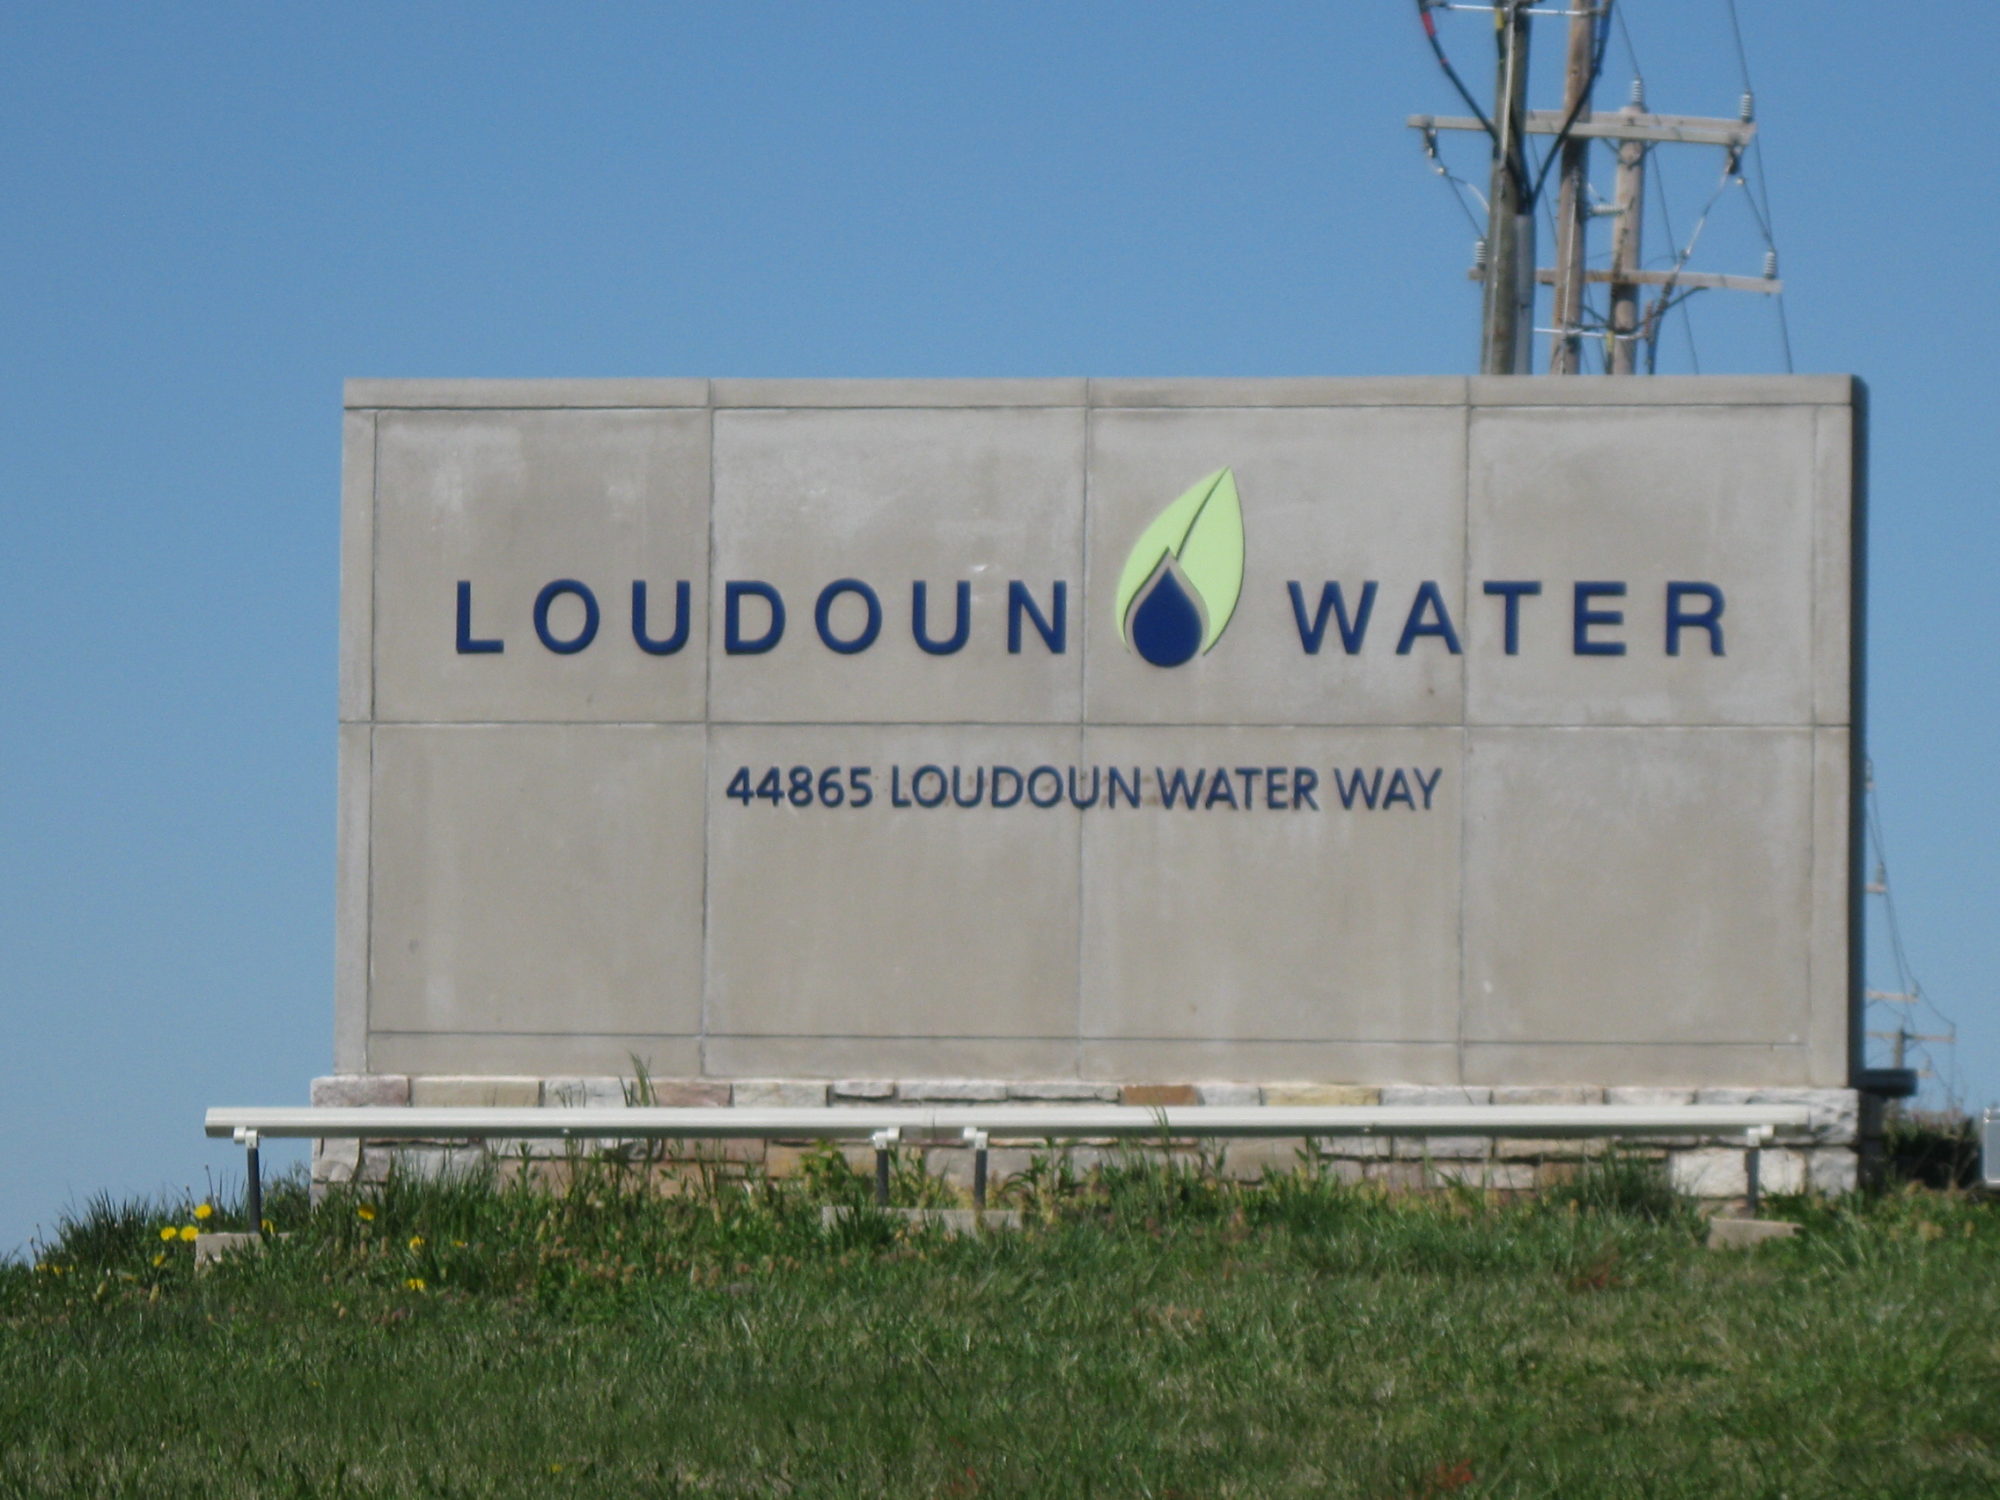 Loudoun Water